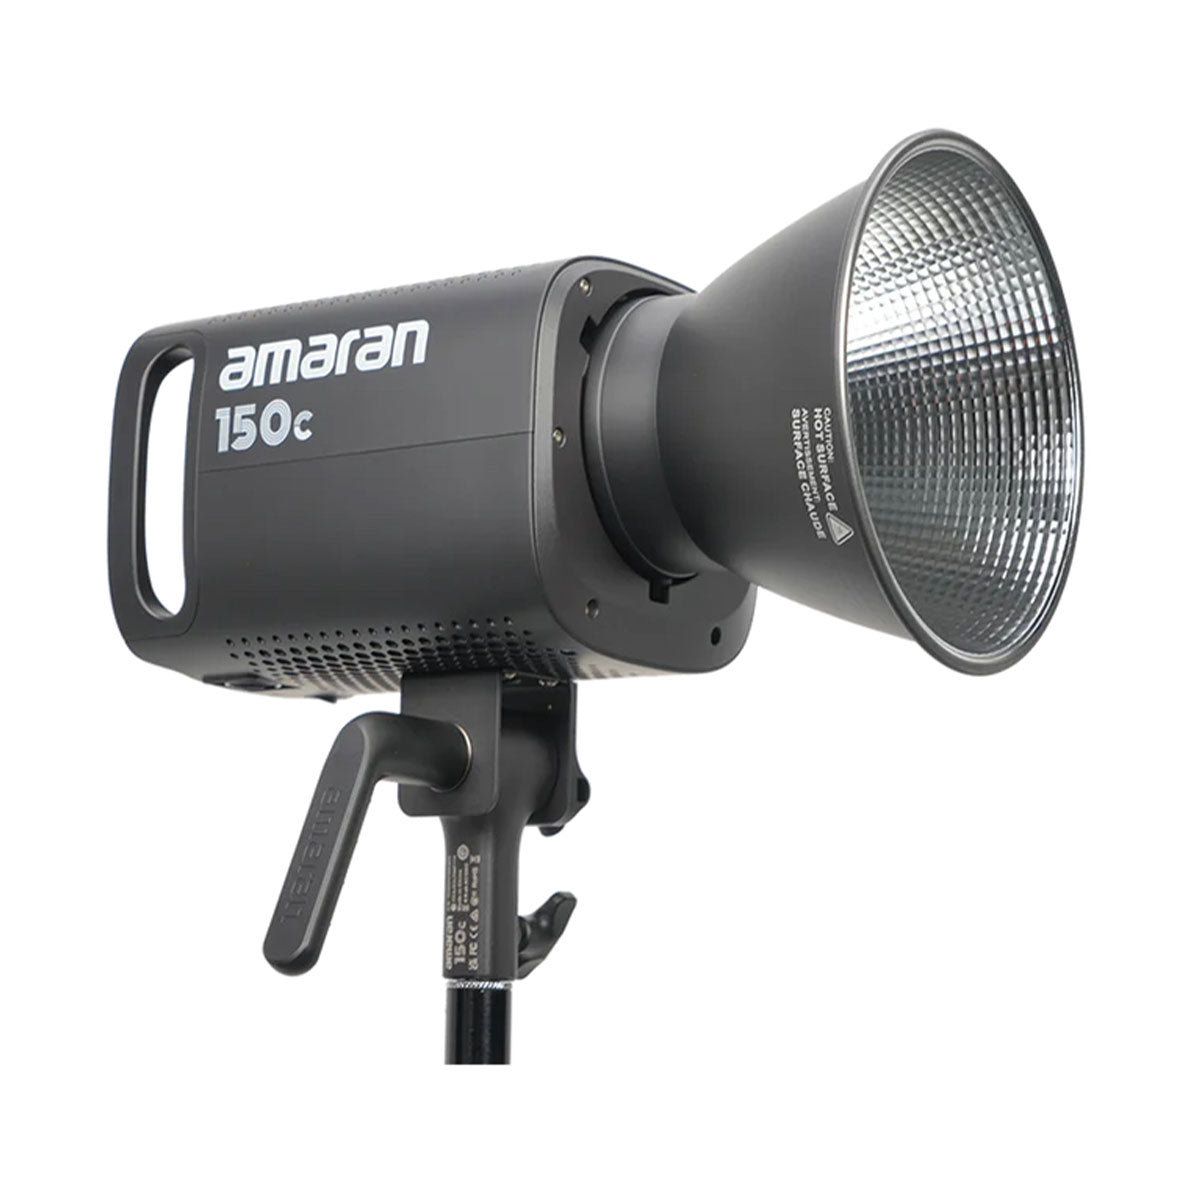 Amaran 150c RGB LED Light (Deep Grey)